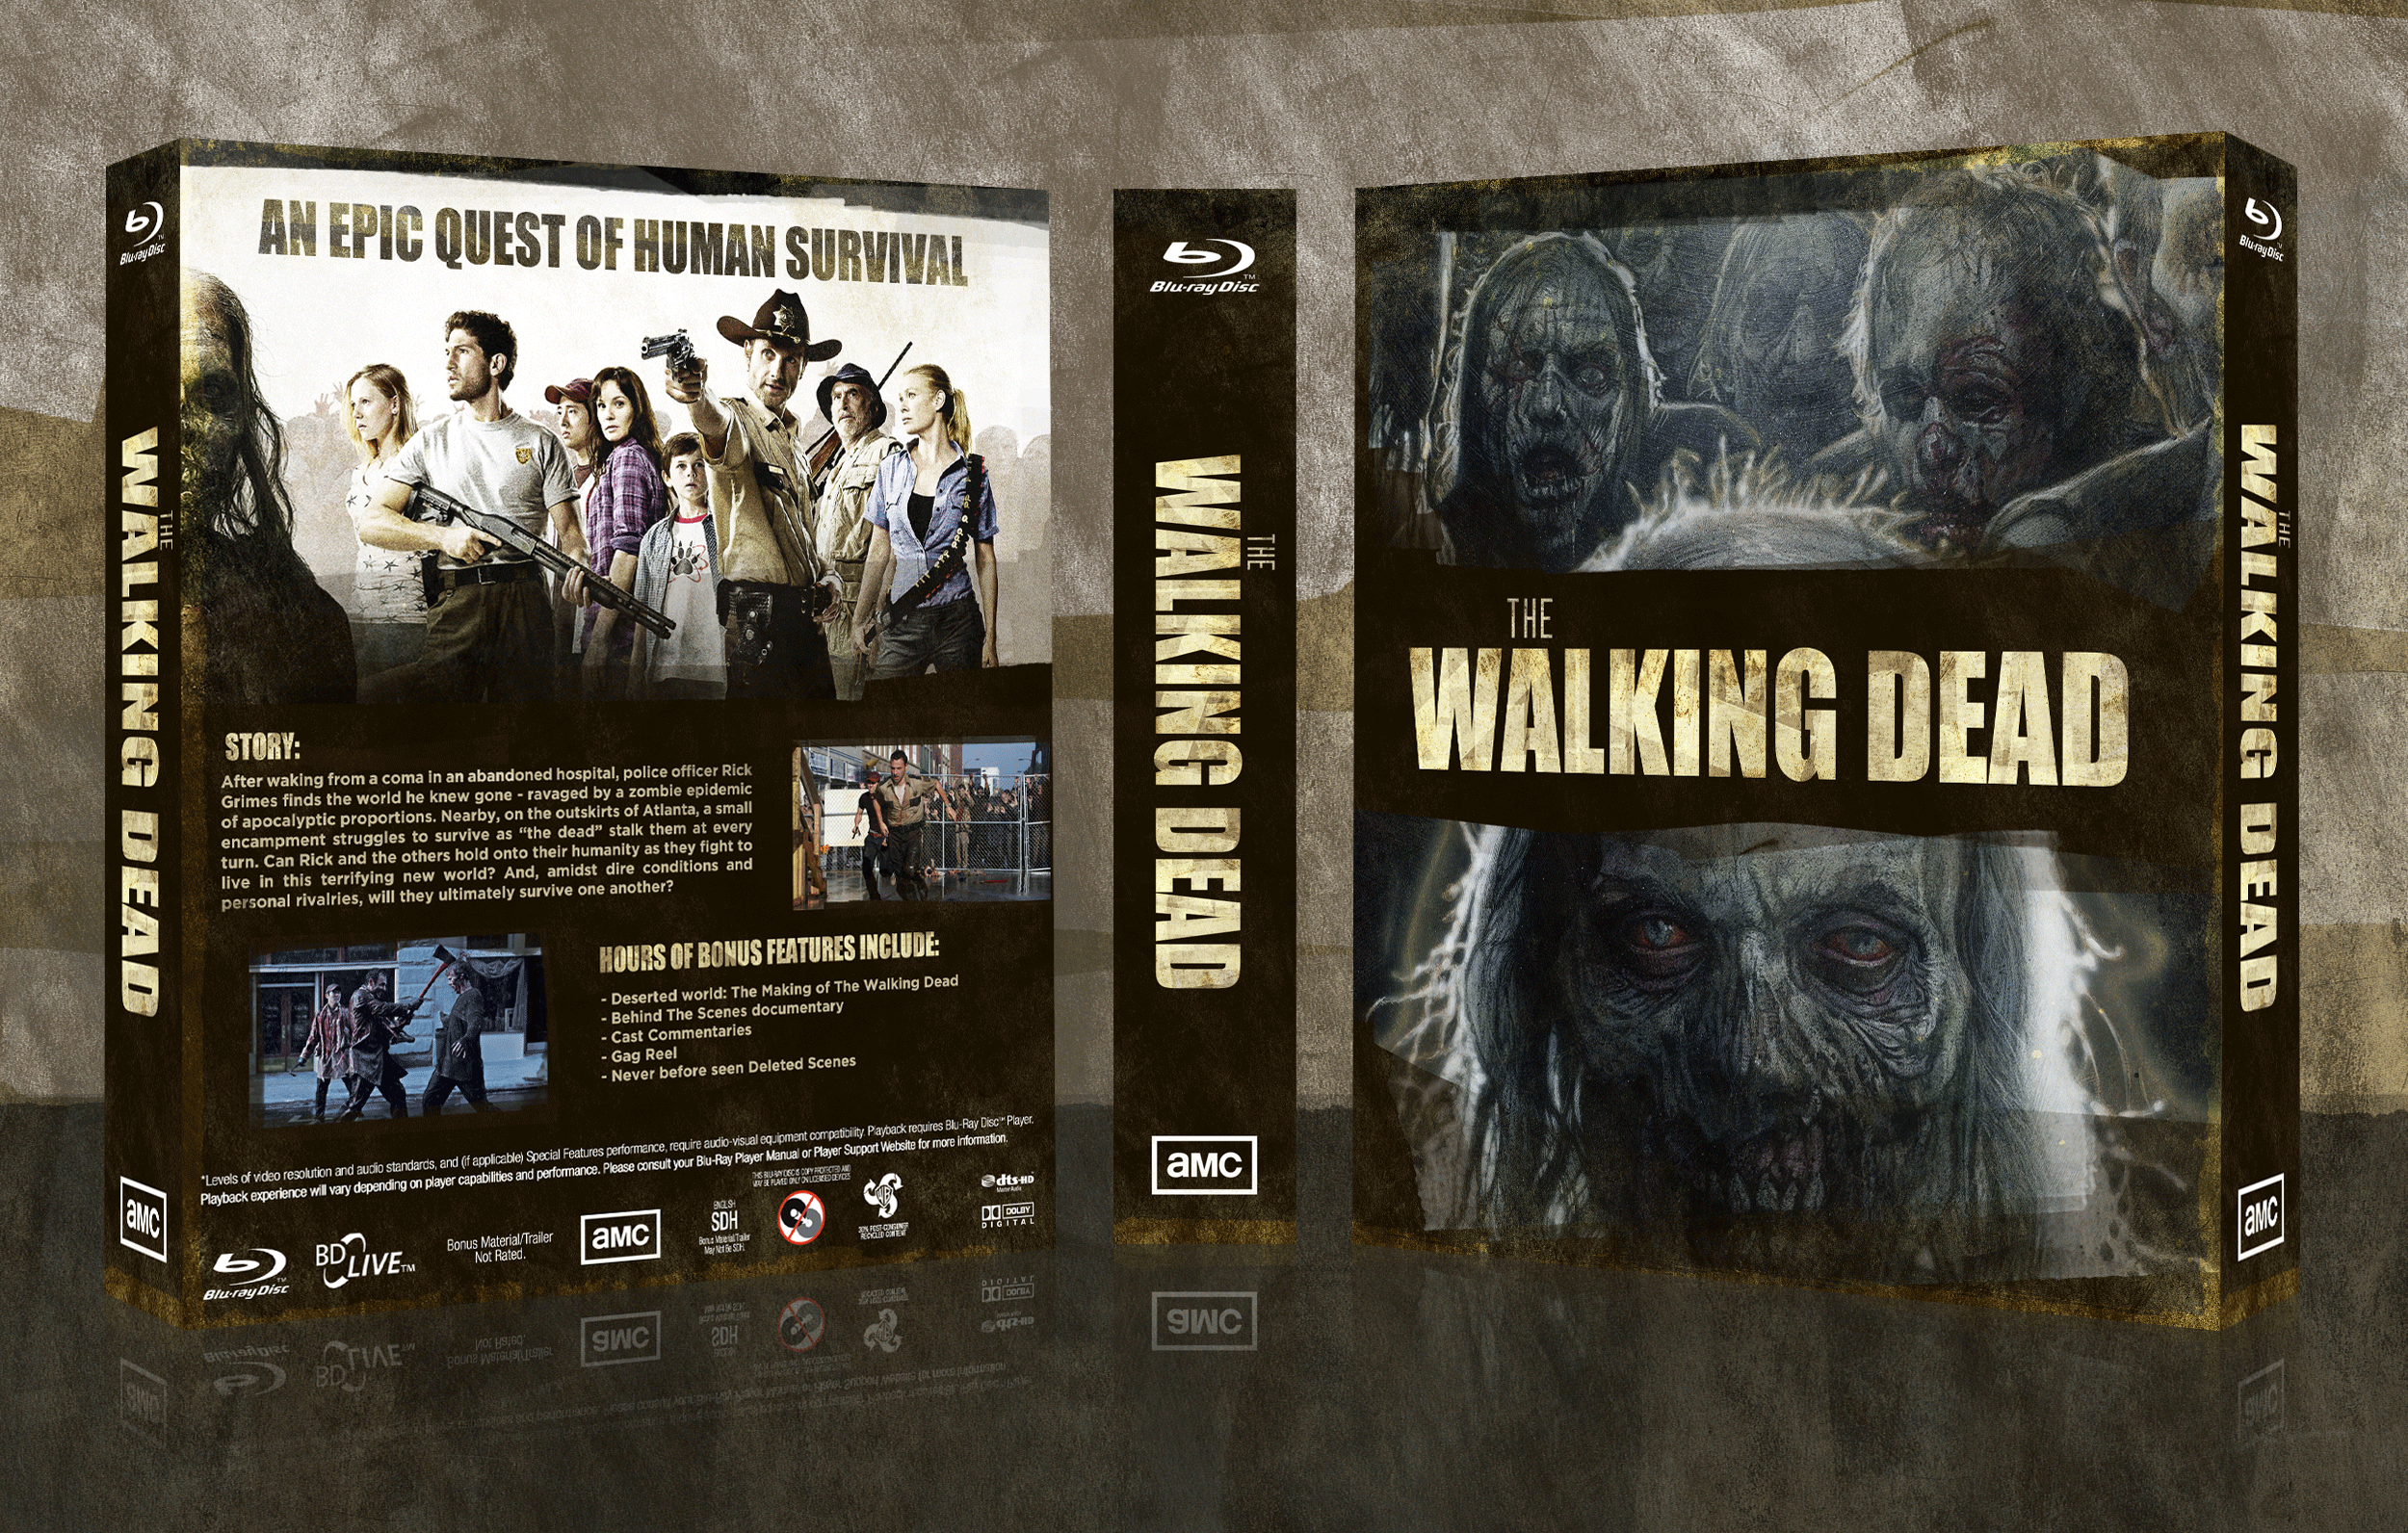 The Walking Dead: Season 1 box cover